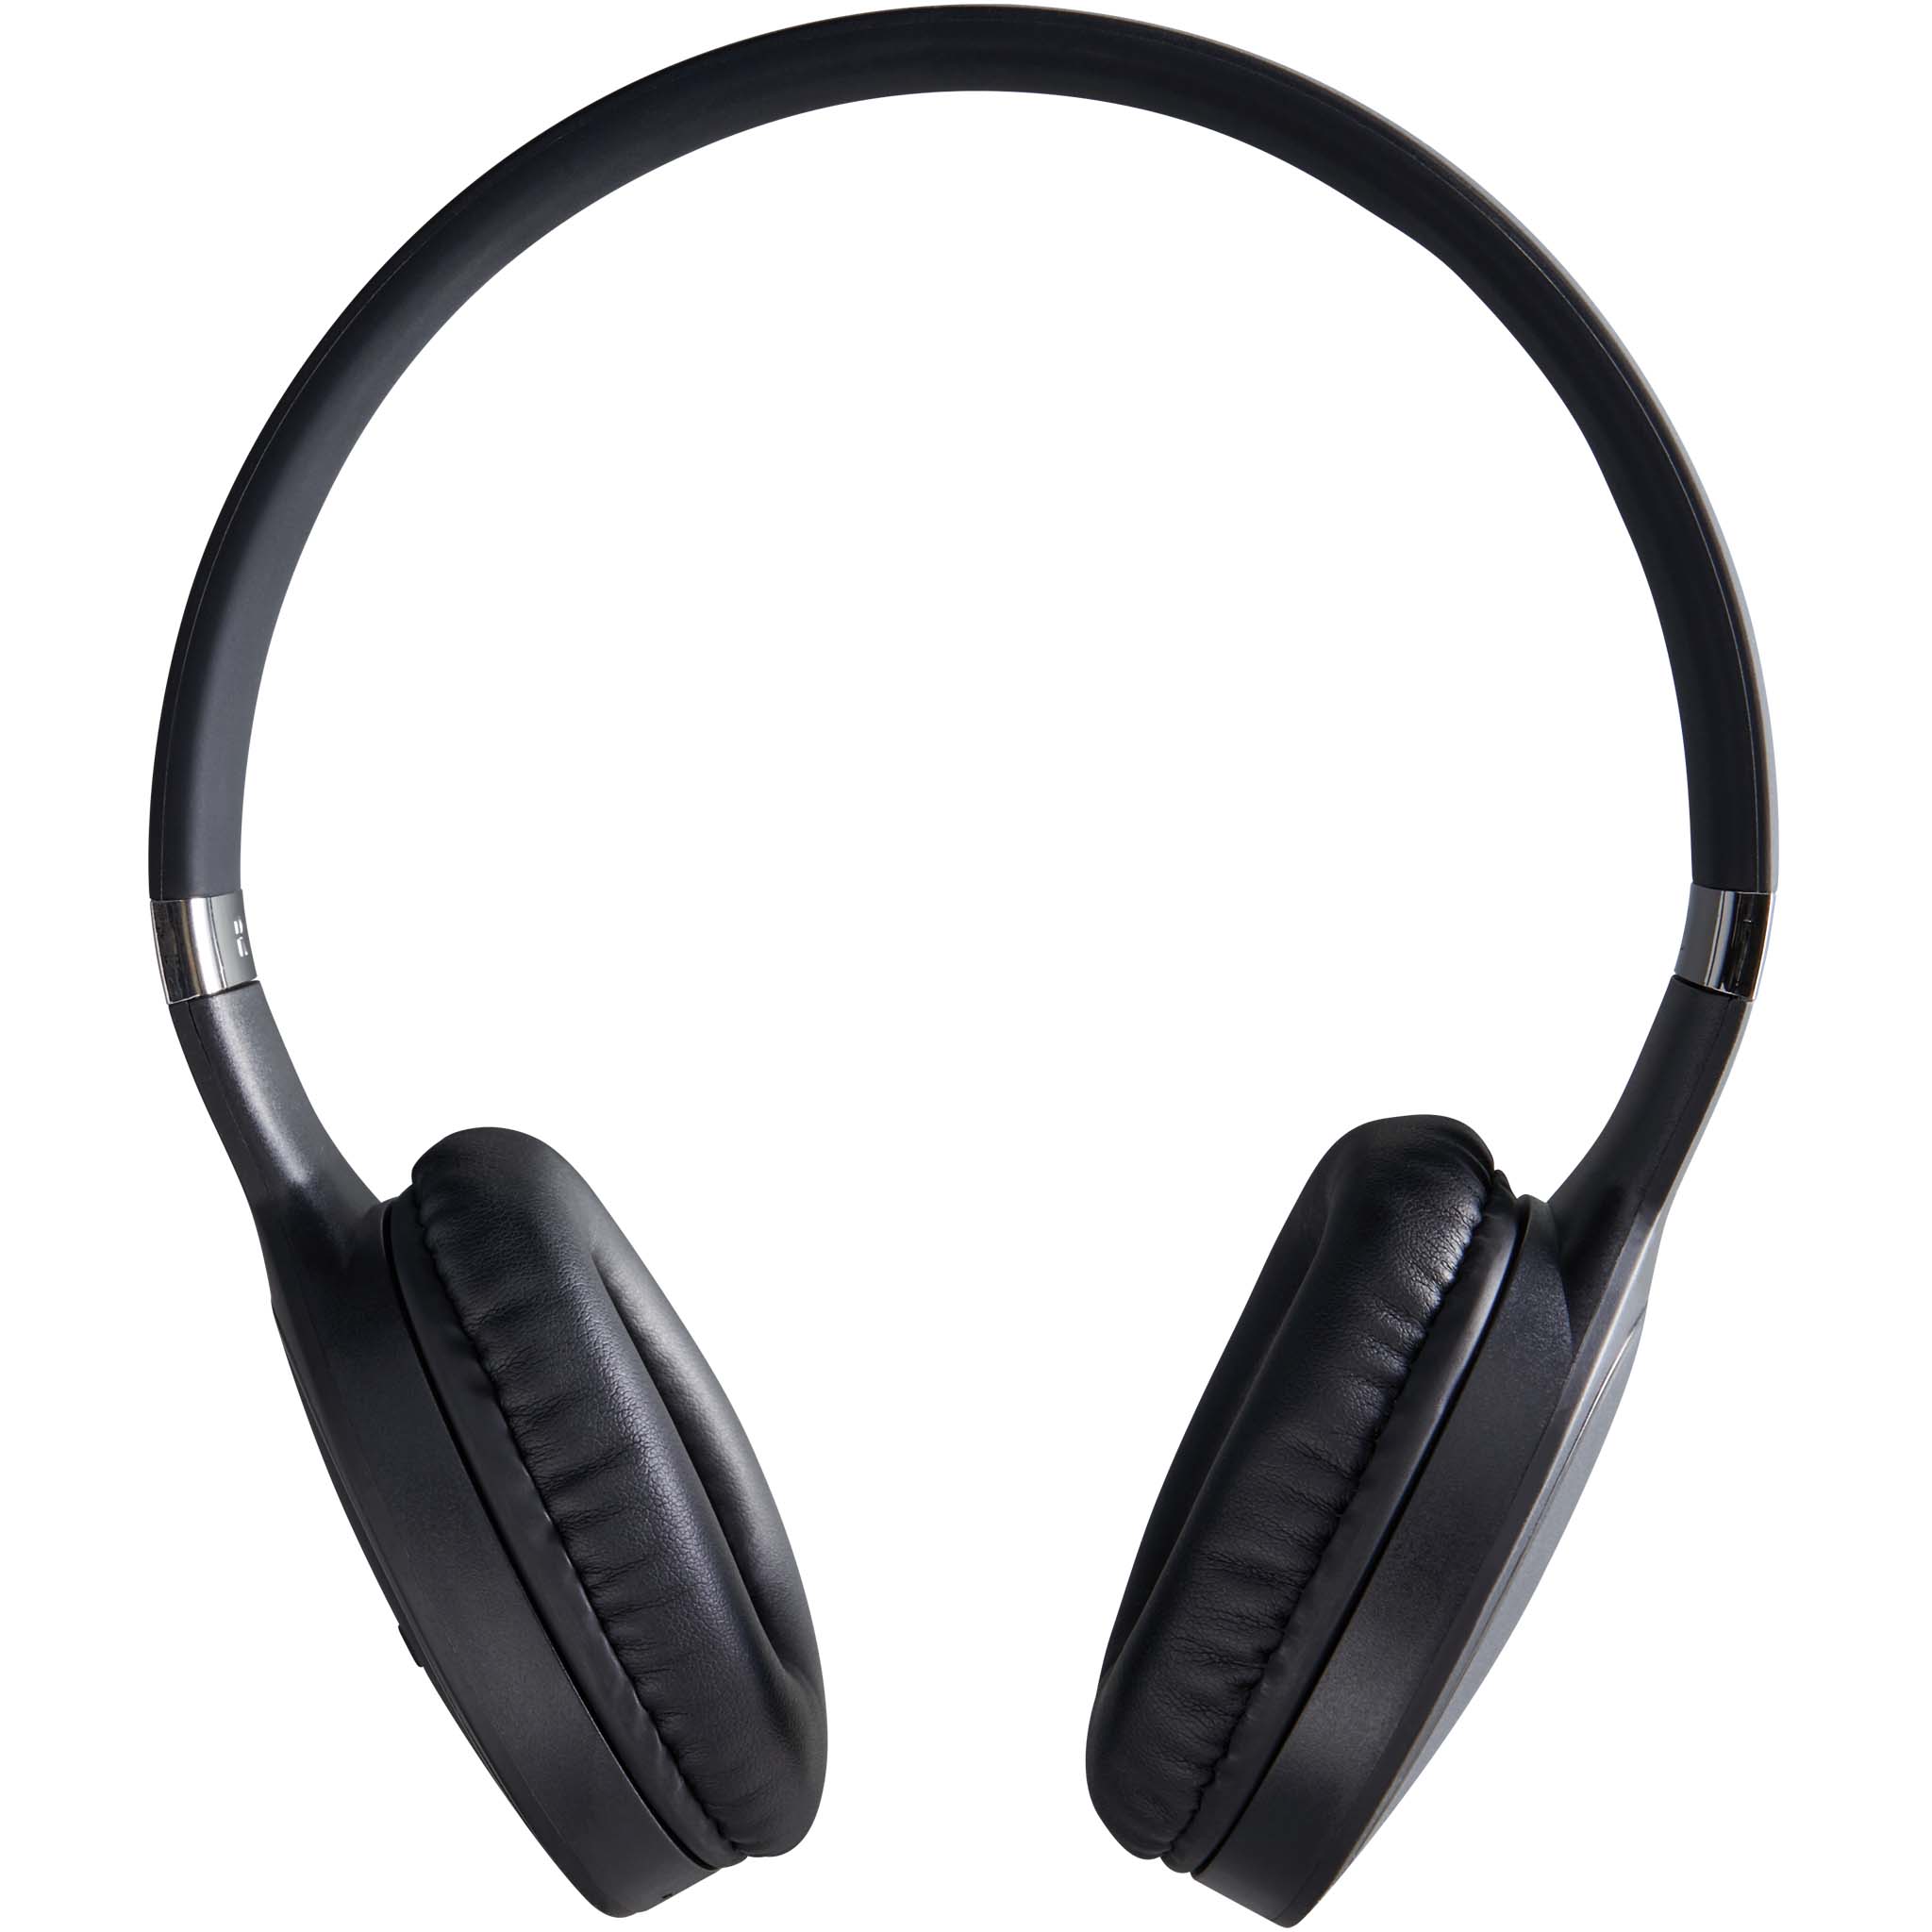 Komodo Bluetooth Headphones